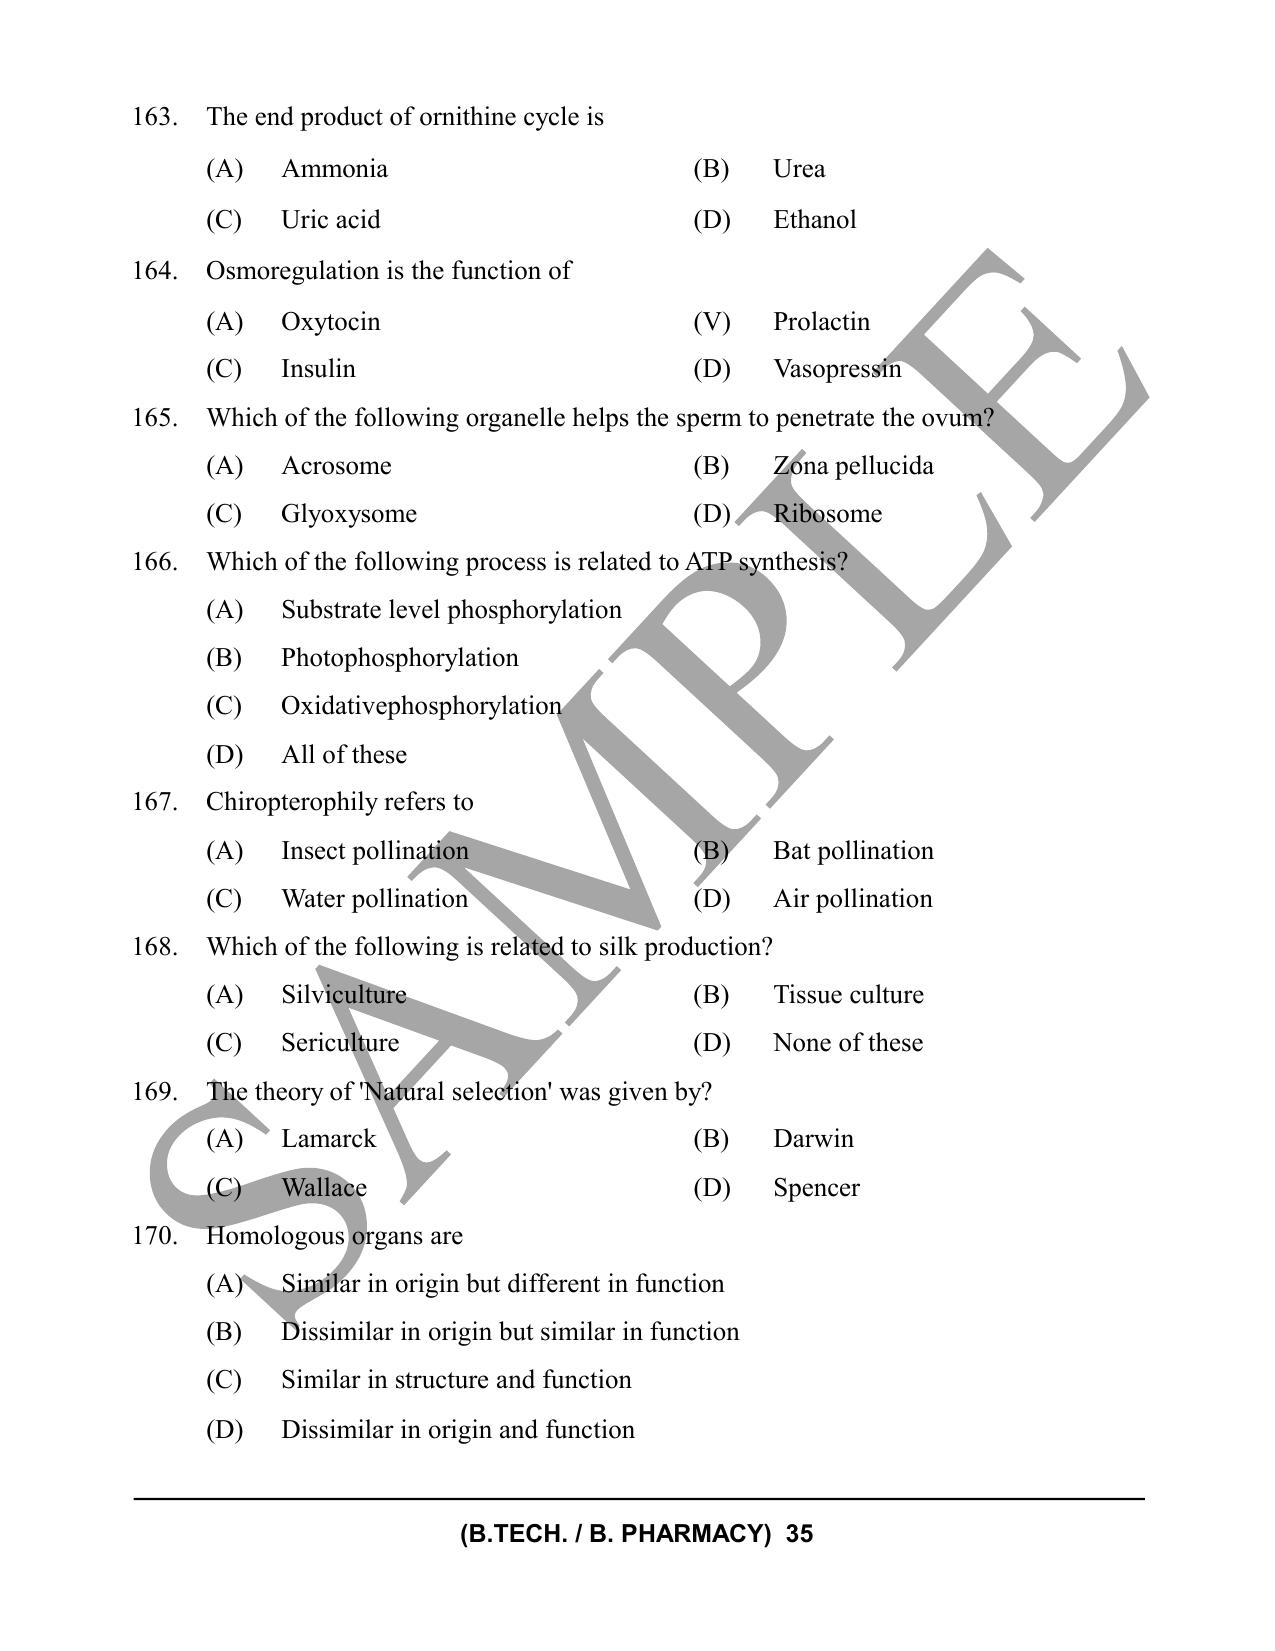 HPCET B. Tech. and B. Pharm. 2023 Sample Paper - Page 35